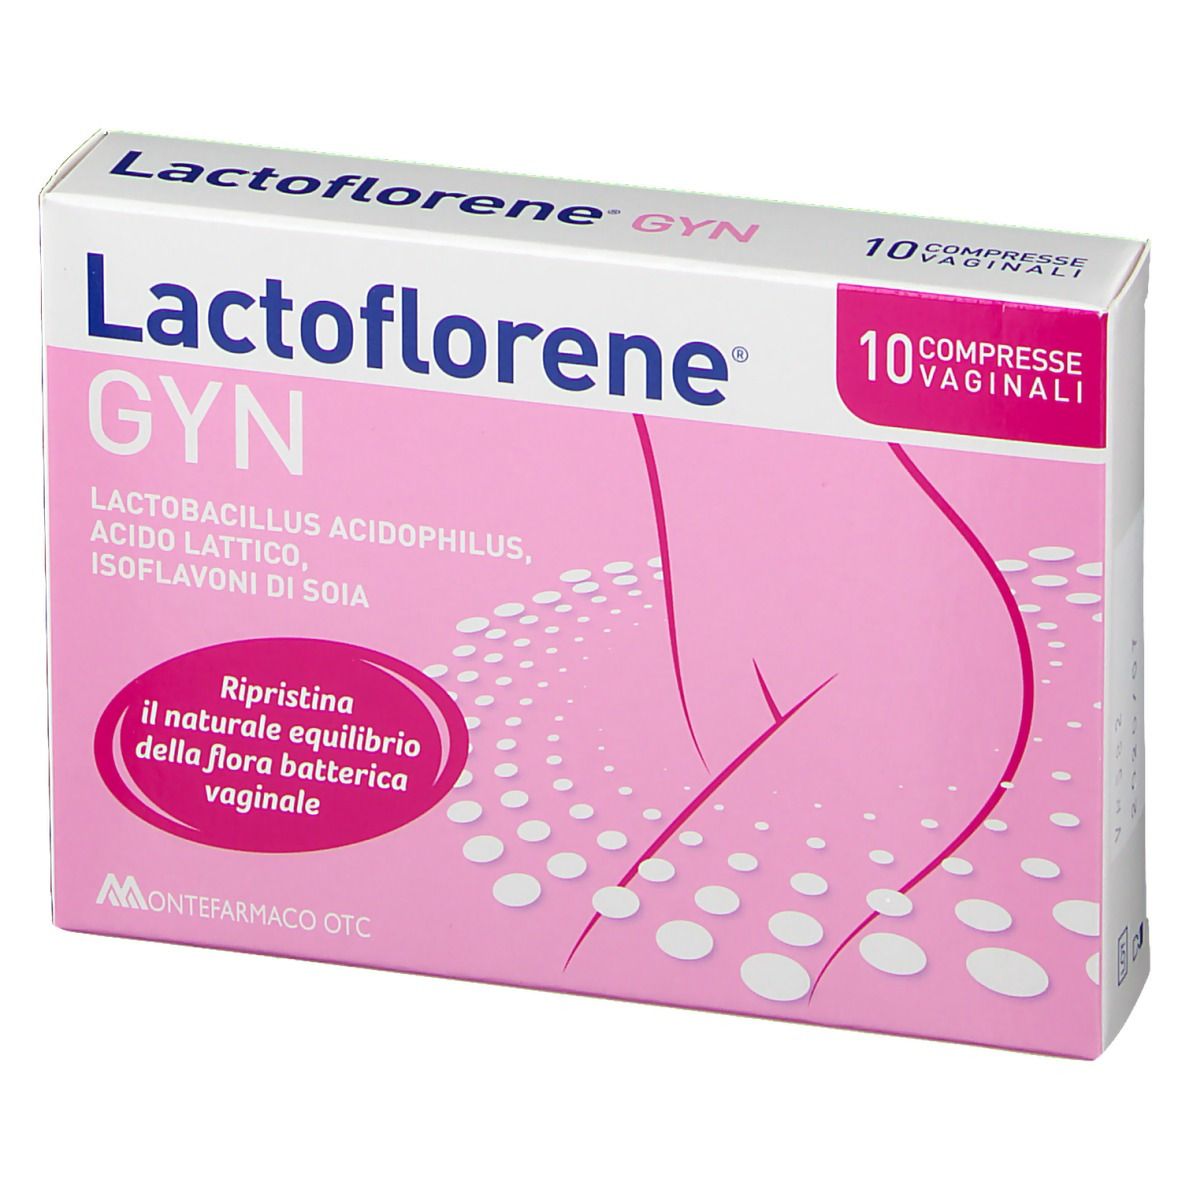 Lactoflorene® Gyn